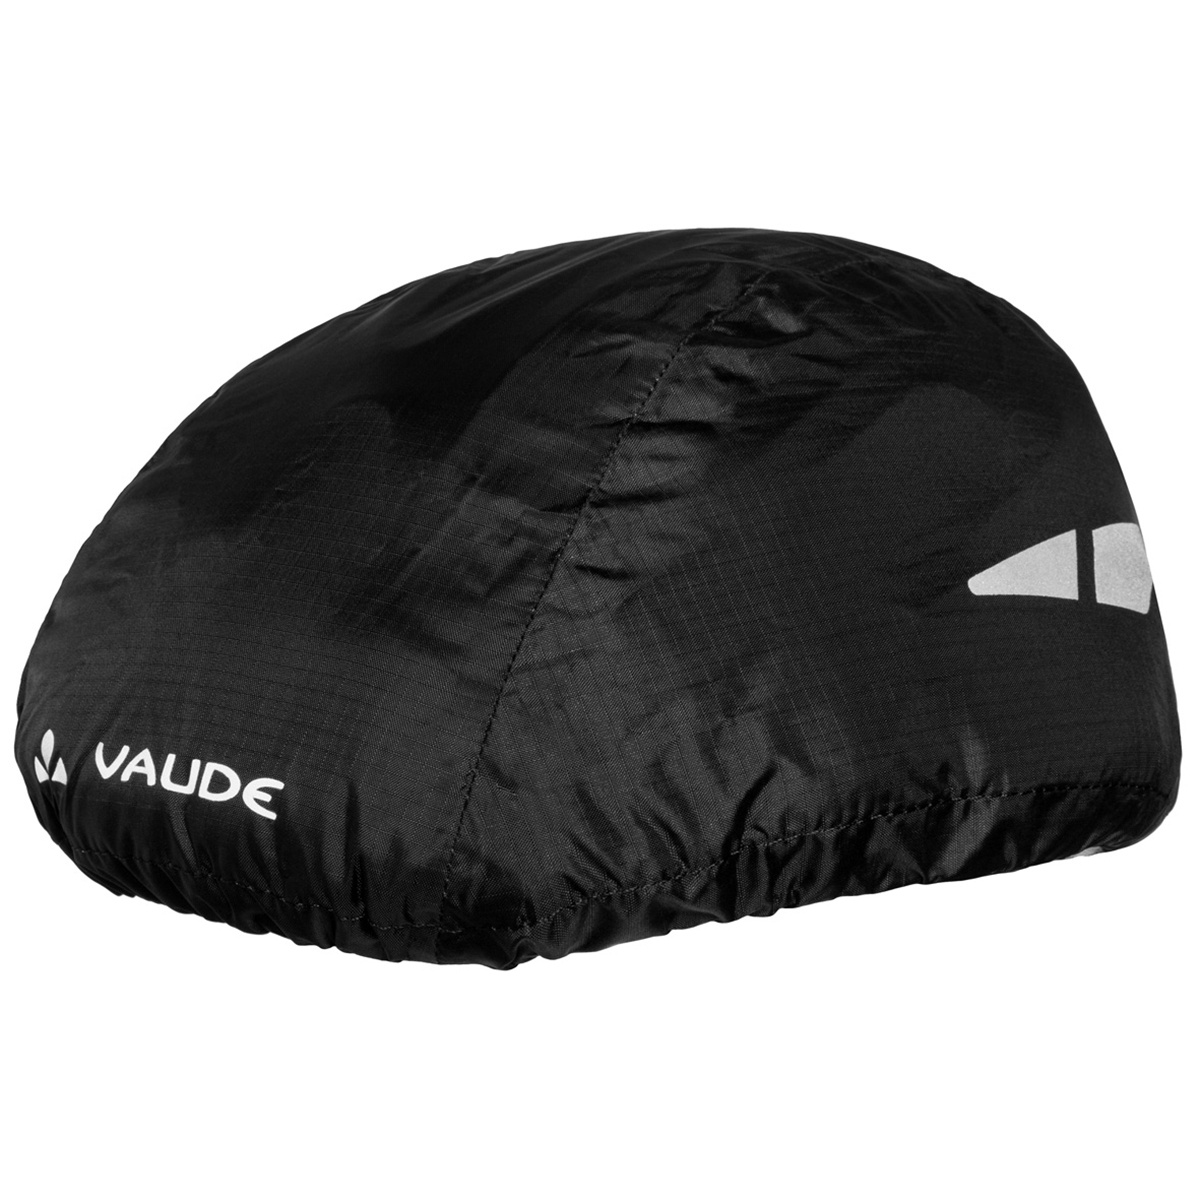 Image of Vaude Uomo Helmet Raincover